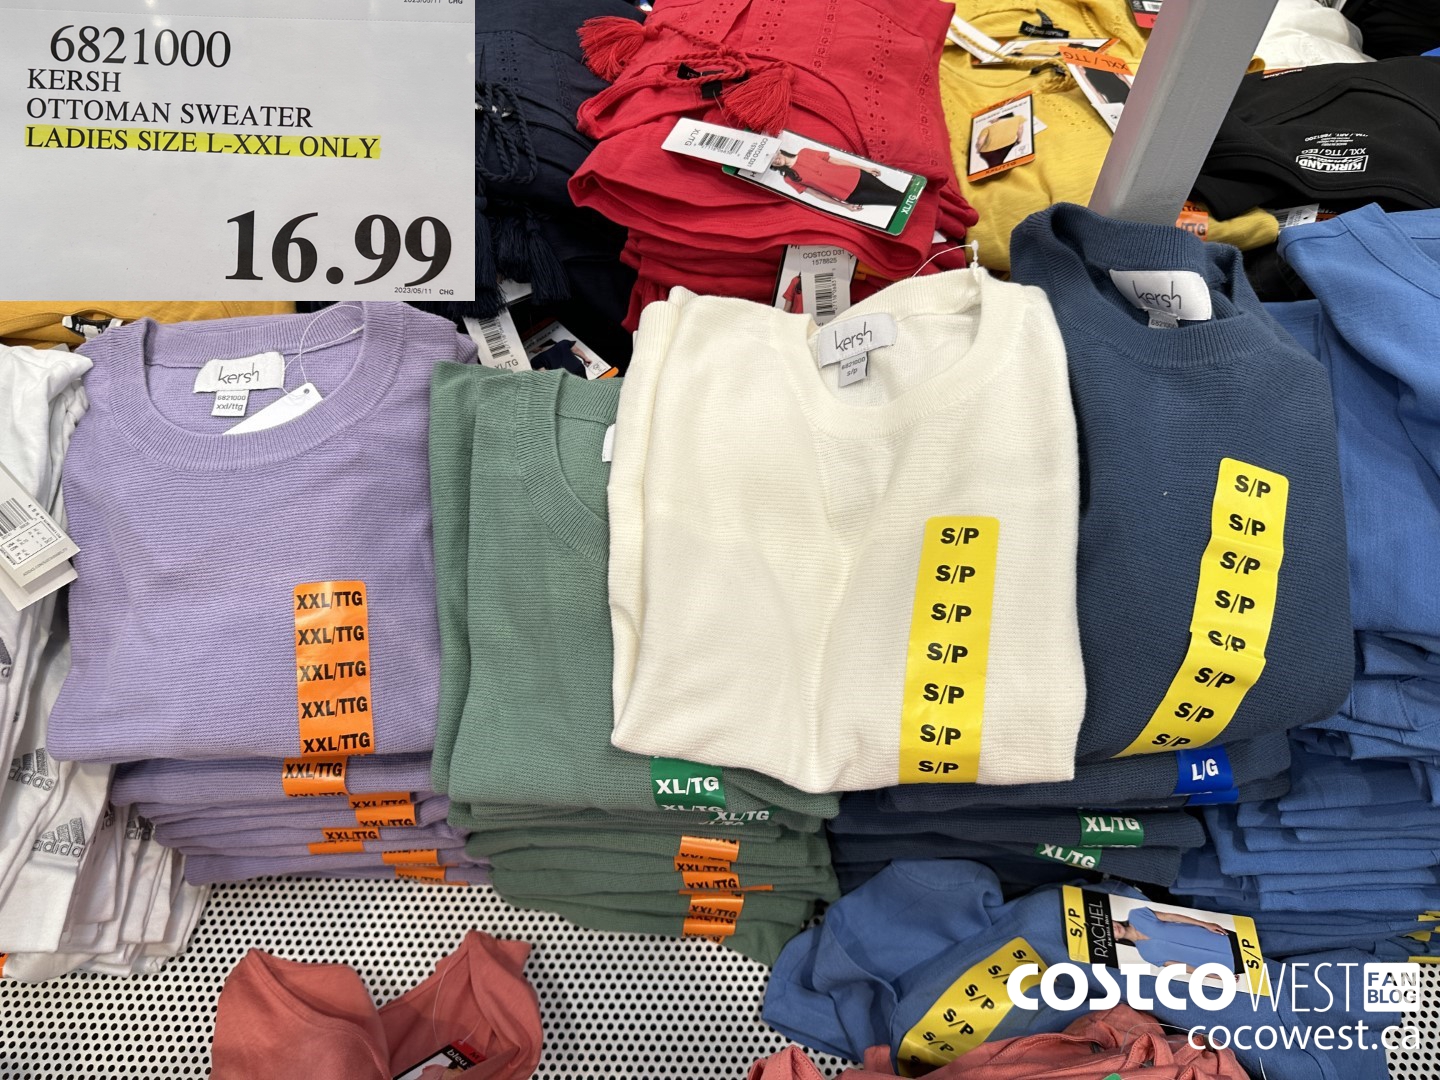 Costco OOTD 👚👟 Felina Tee: $7.99 SC&Co Skort: $14.99 Hurley tennis shoes:  $19.99 Puma sock liners 8pr: $9.99 #costcofinds #costcofa